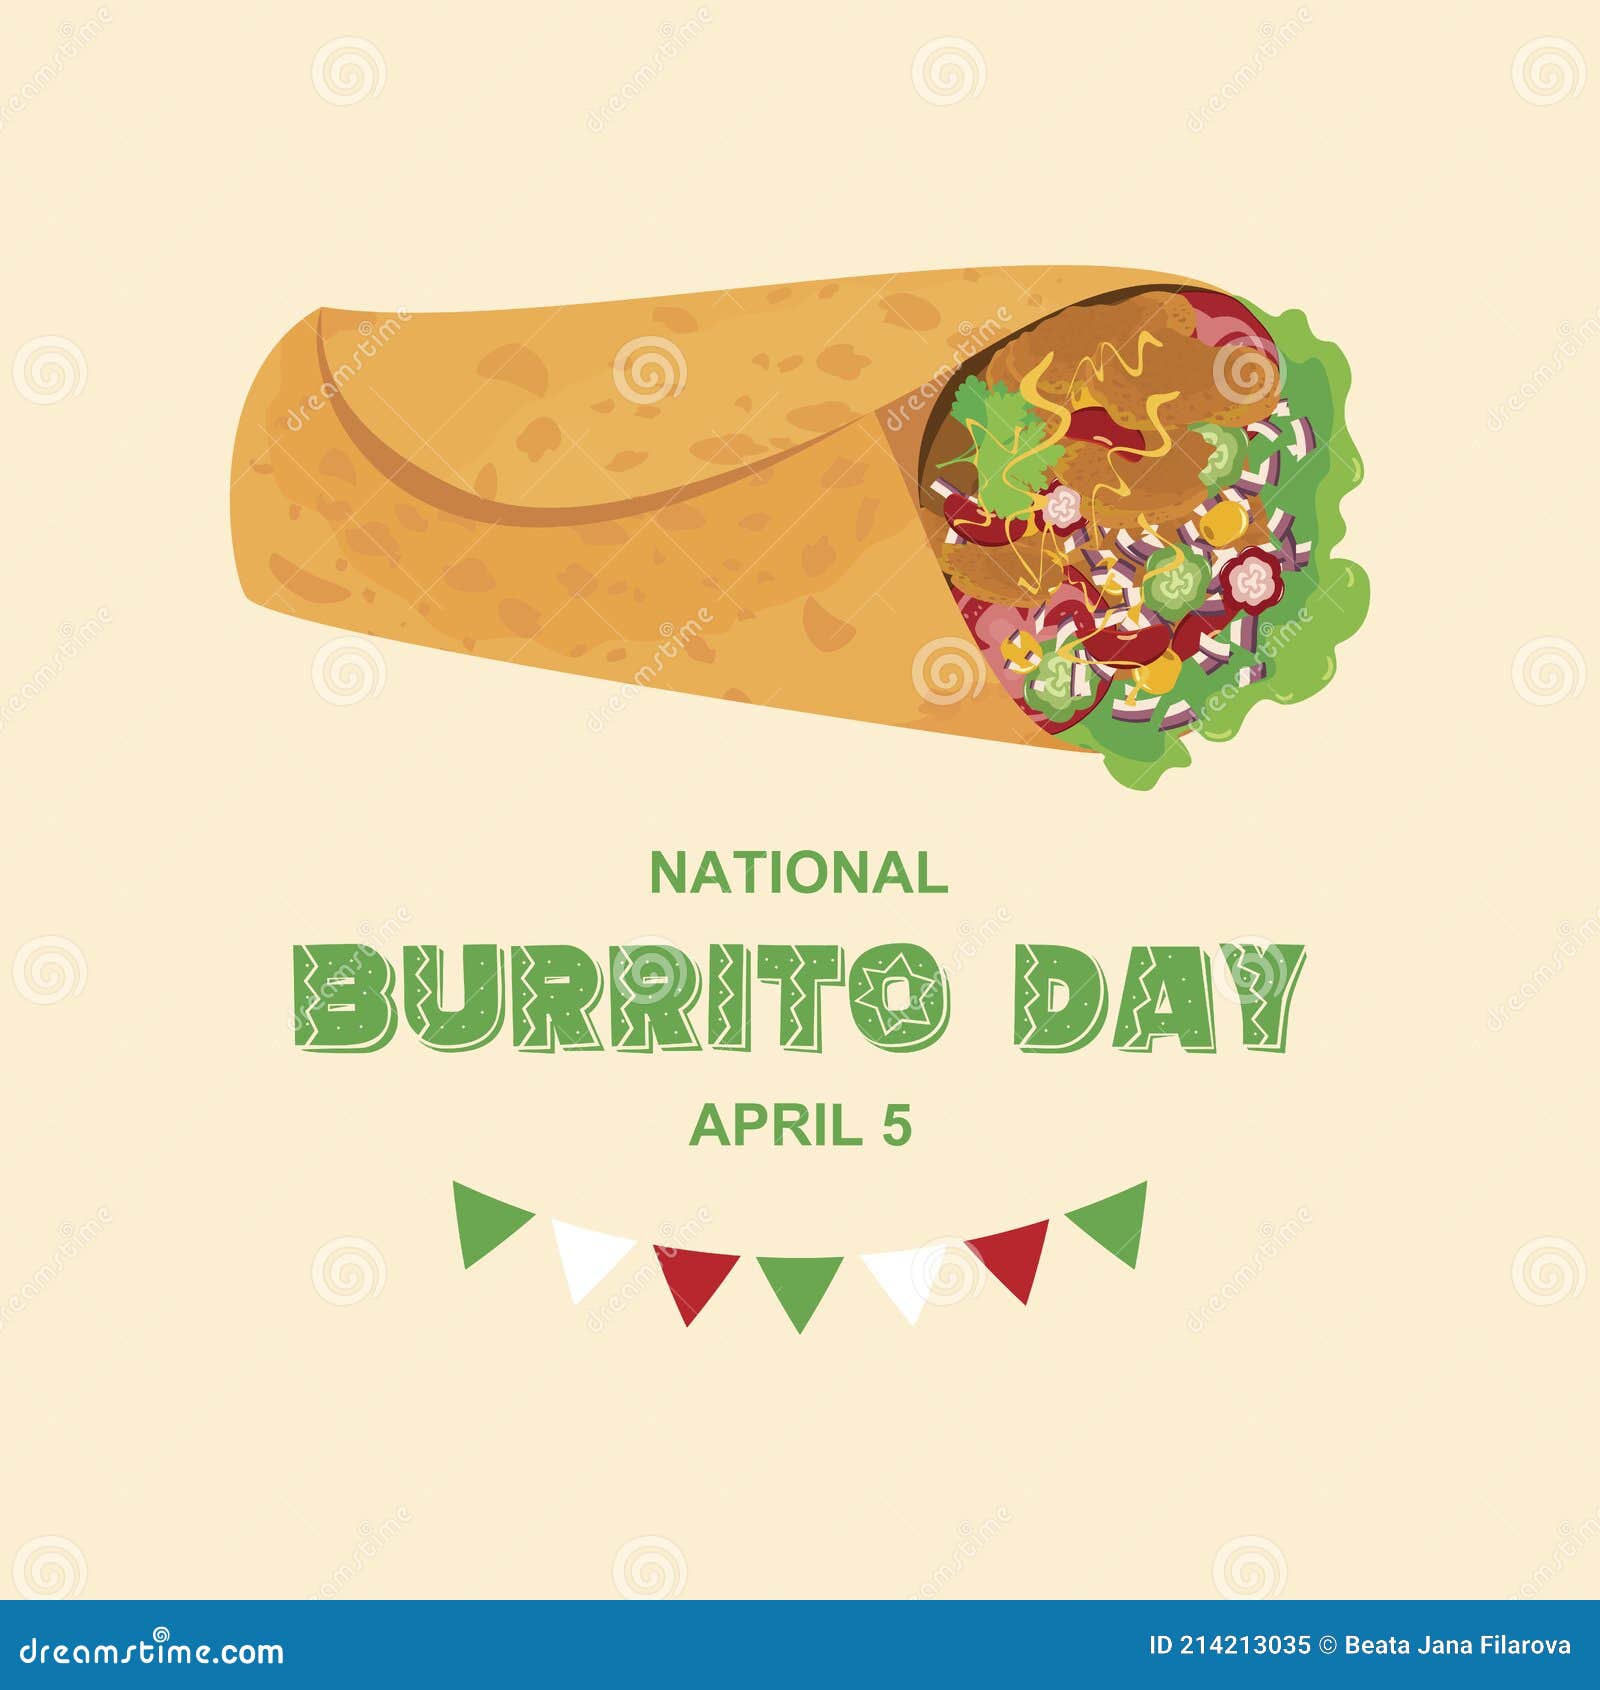 National Burrito Day Vector Stock Vector Illustration of gourmet